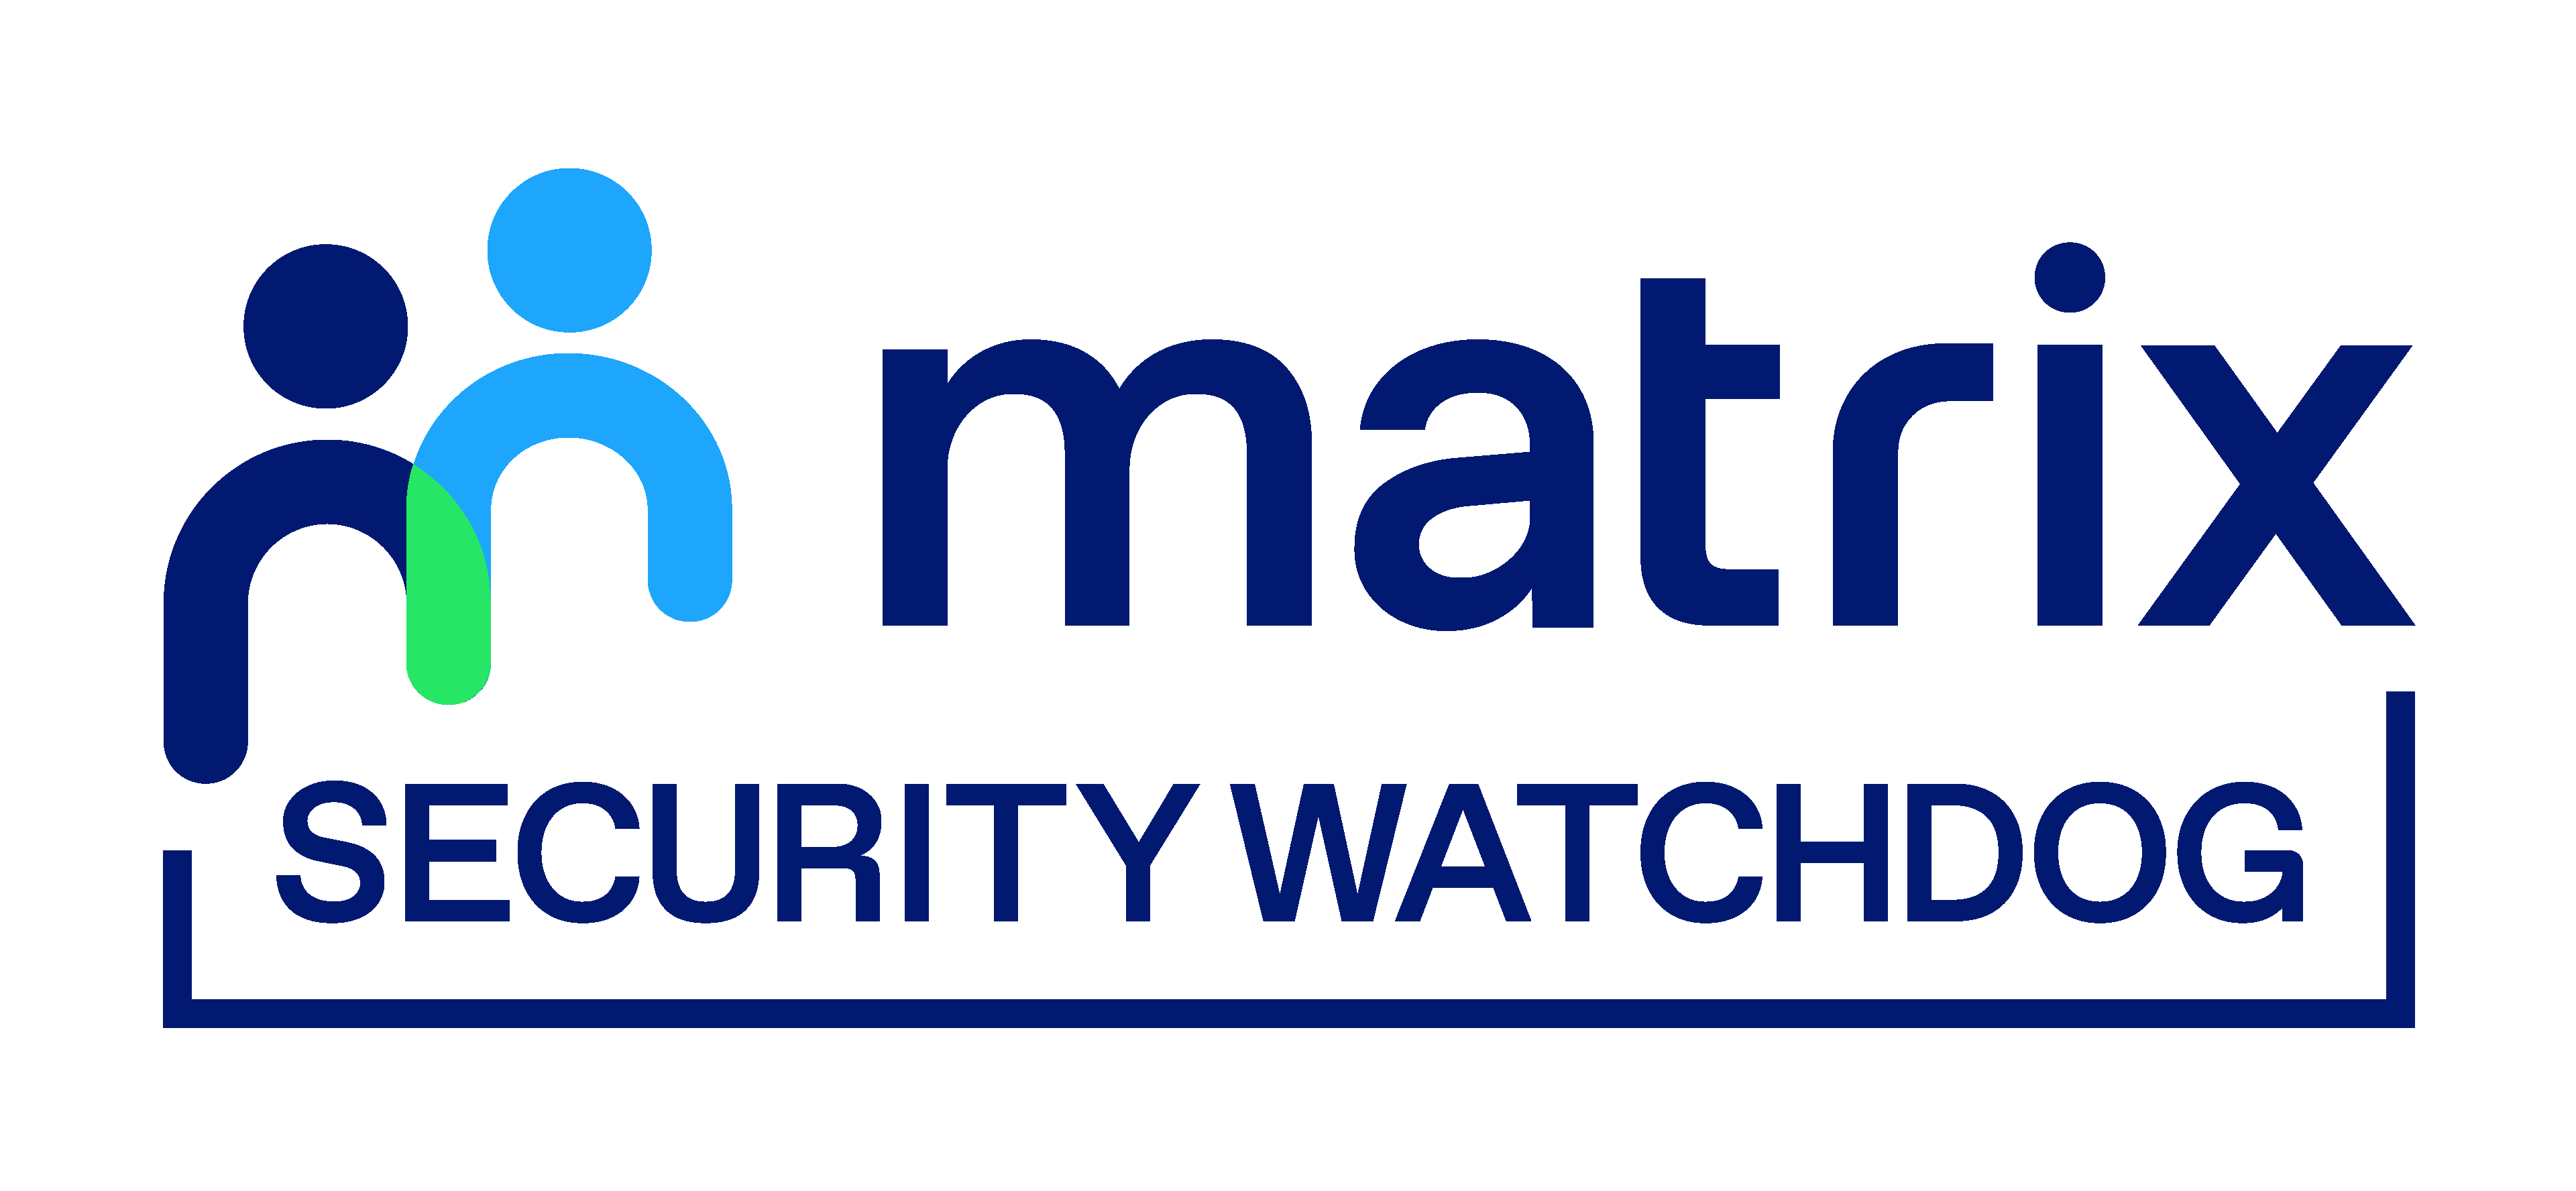 Security Watchdog logo